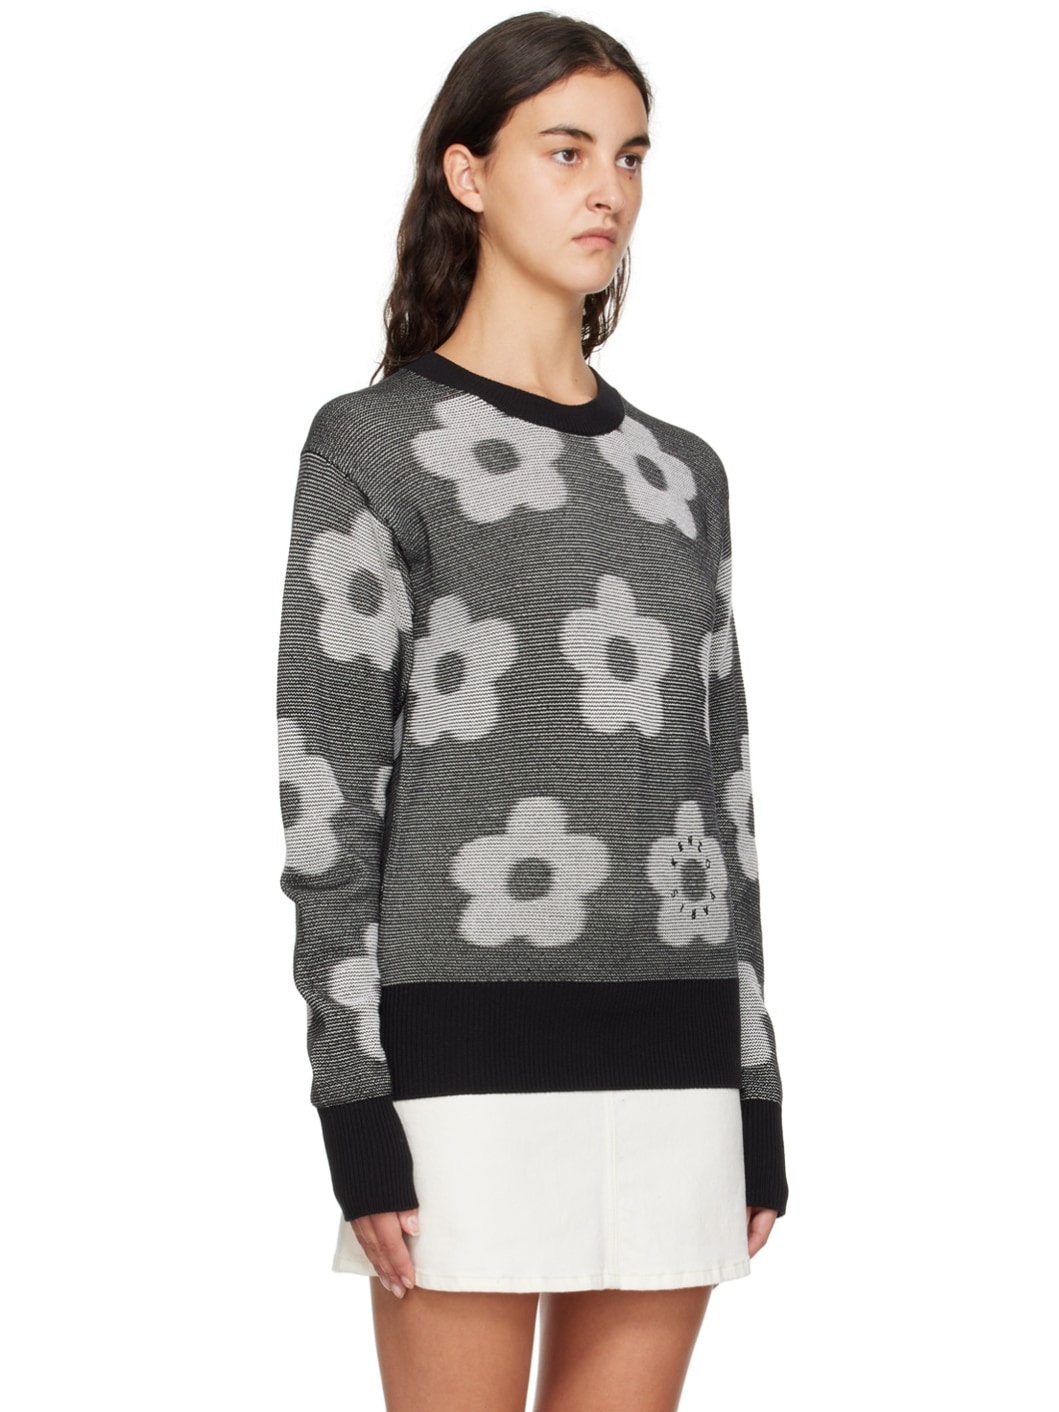 Black & White Kenzo Paris Flower Spot Sweater - 2